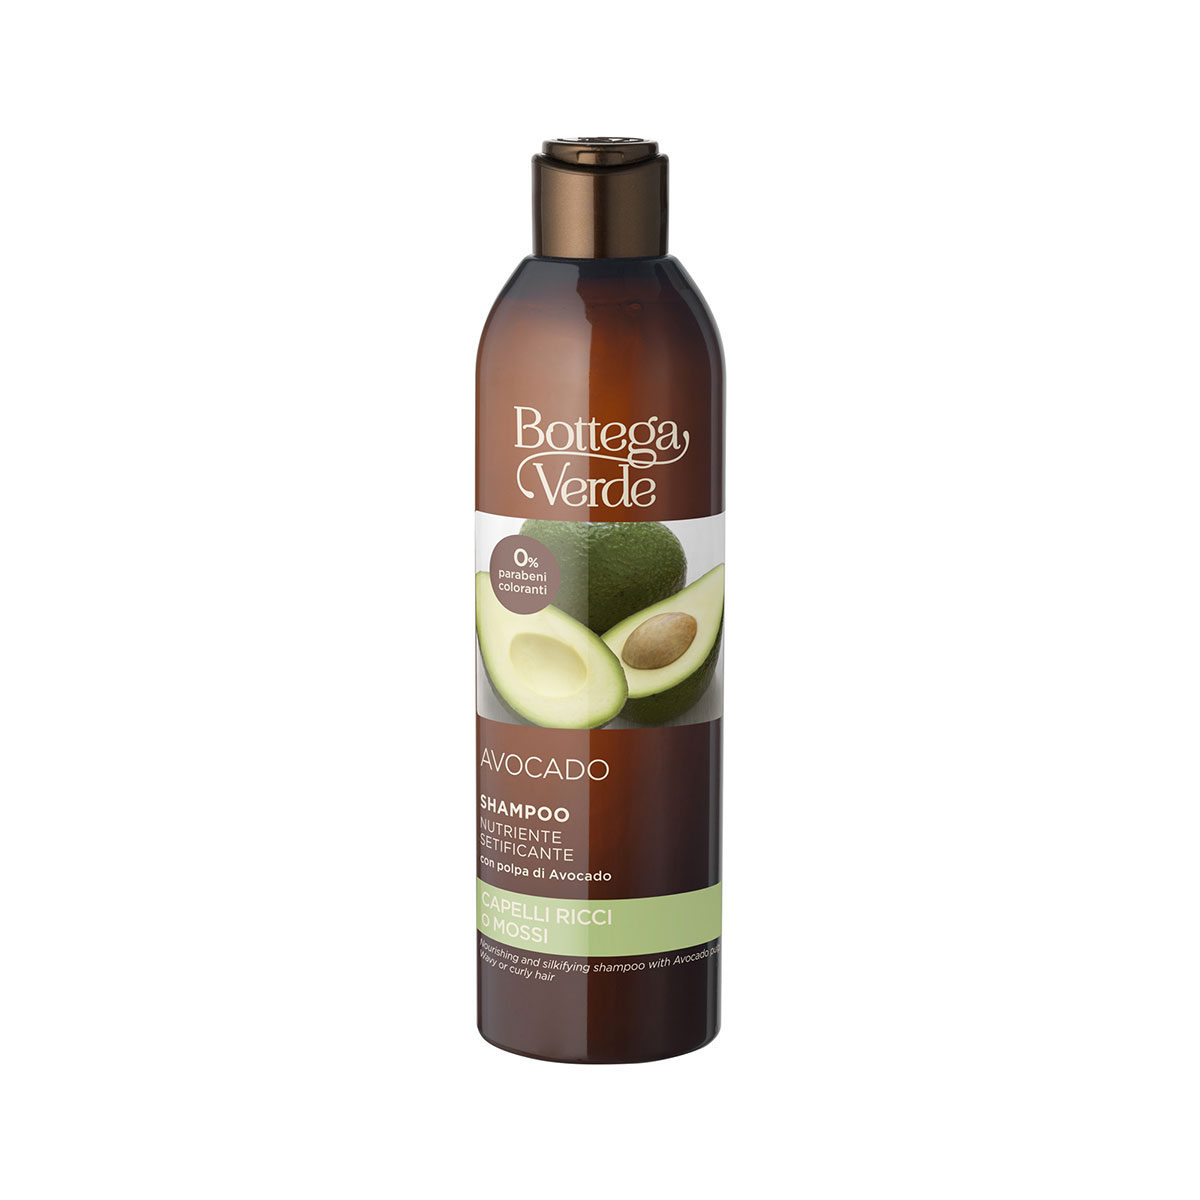 Avocado - Nourishing and Silkifying Shampoo - with Avocado Pulp (250 ml) - Wavy or Curly Hair